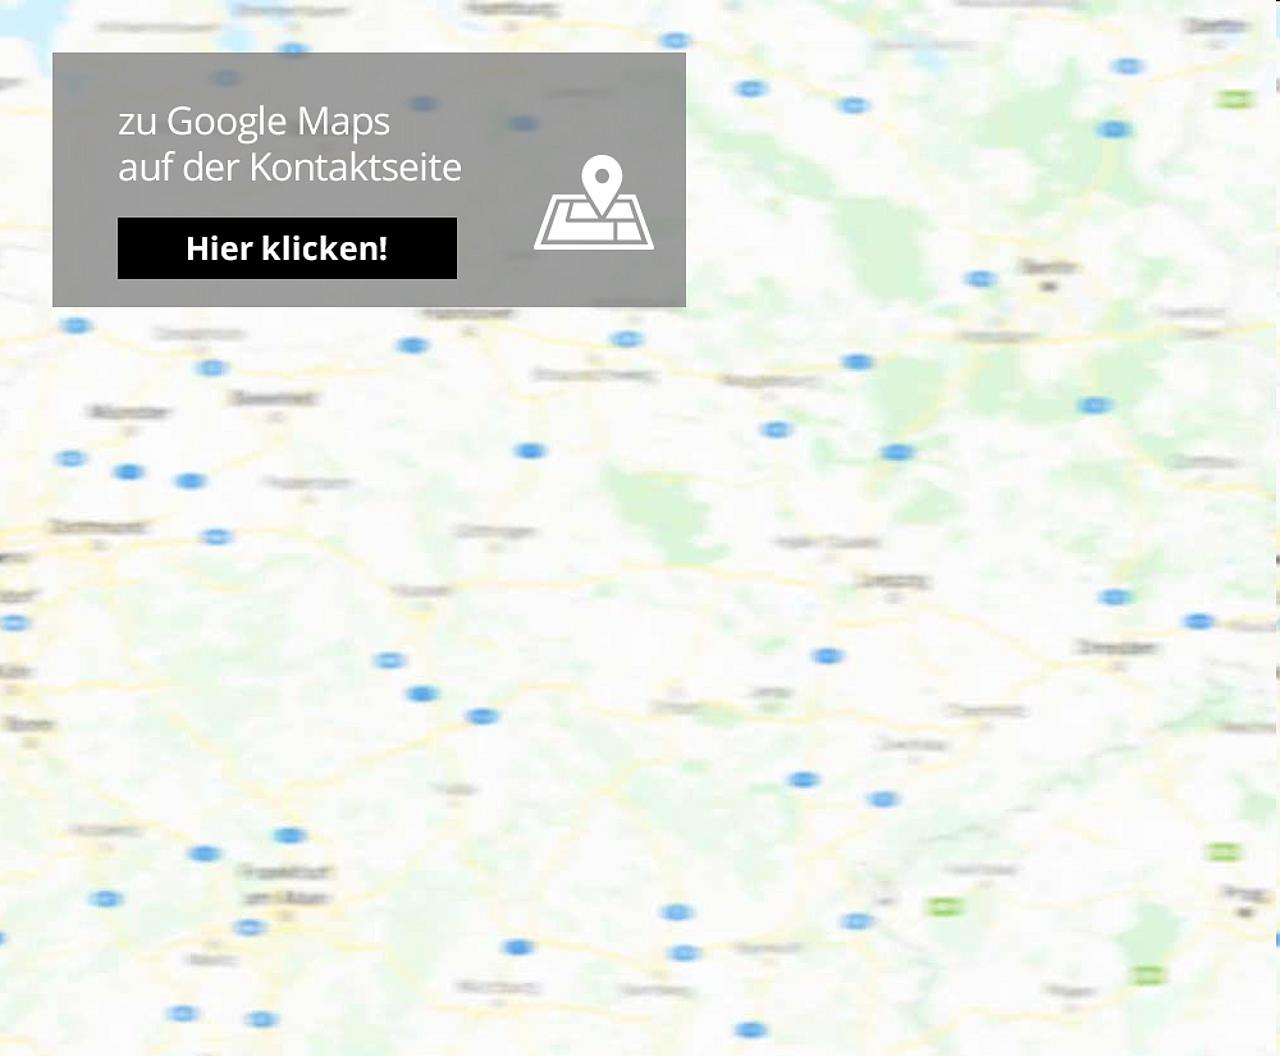 Link zur interaktiven Karte Heiligenhaus, Essen – Kettwig , Ratingen – Hösel, Ratingen – Homberg, Ratingen - Lintorf, Mettmann, Wülfrath